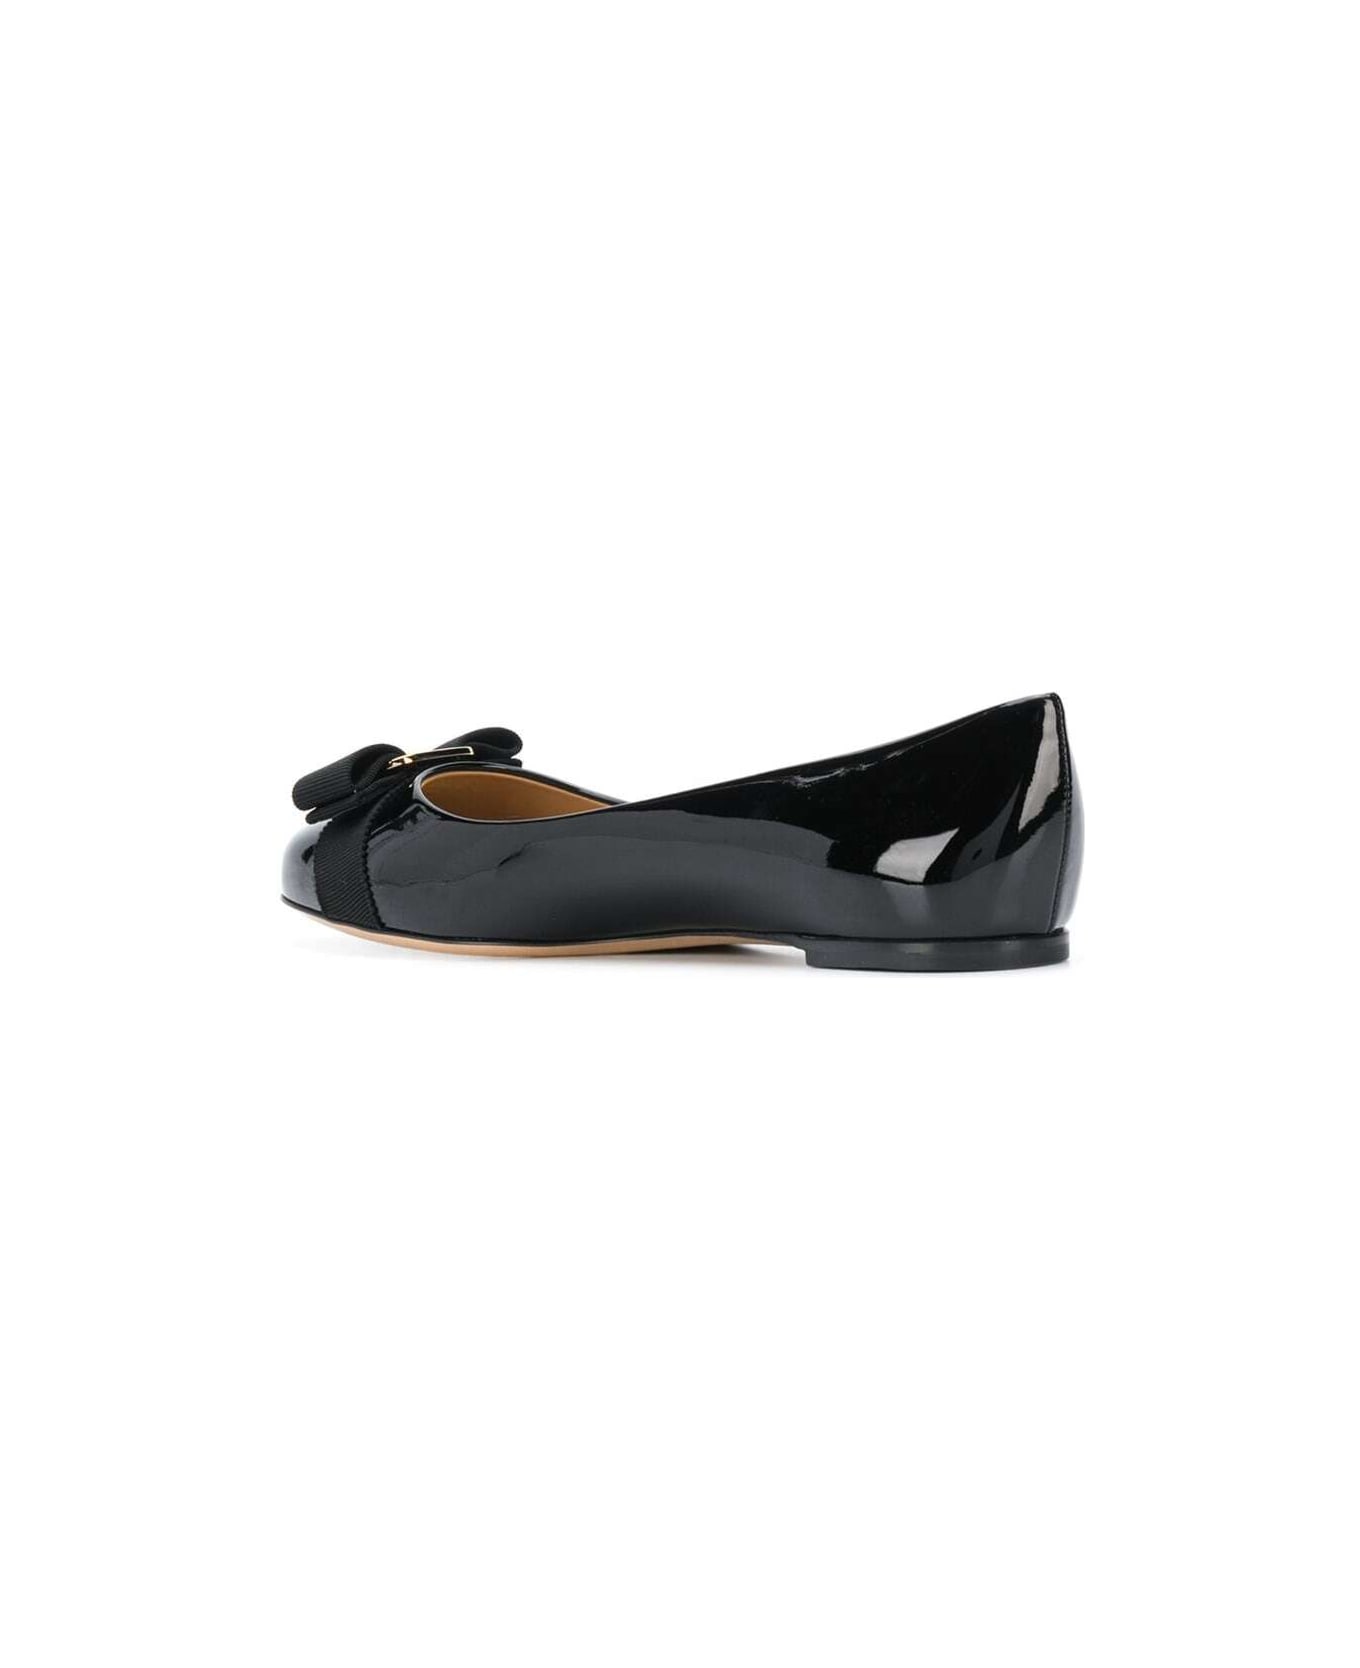 Ferragamo Varina Patent Leather Flat Shoes With Bow - Black フラットシューズ